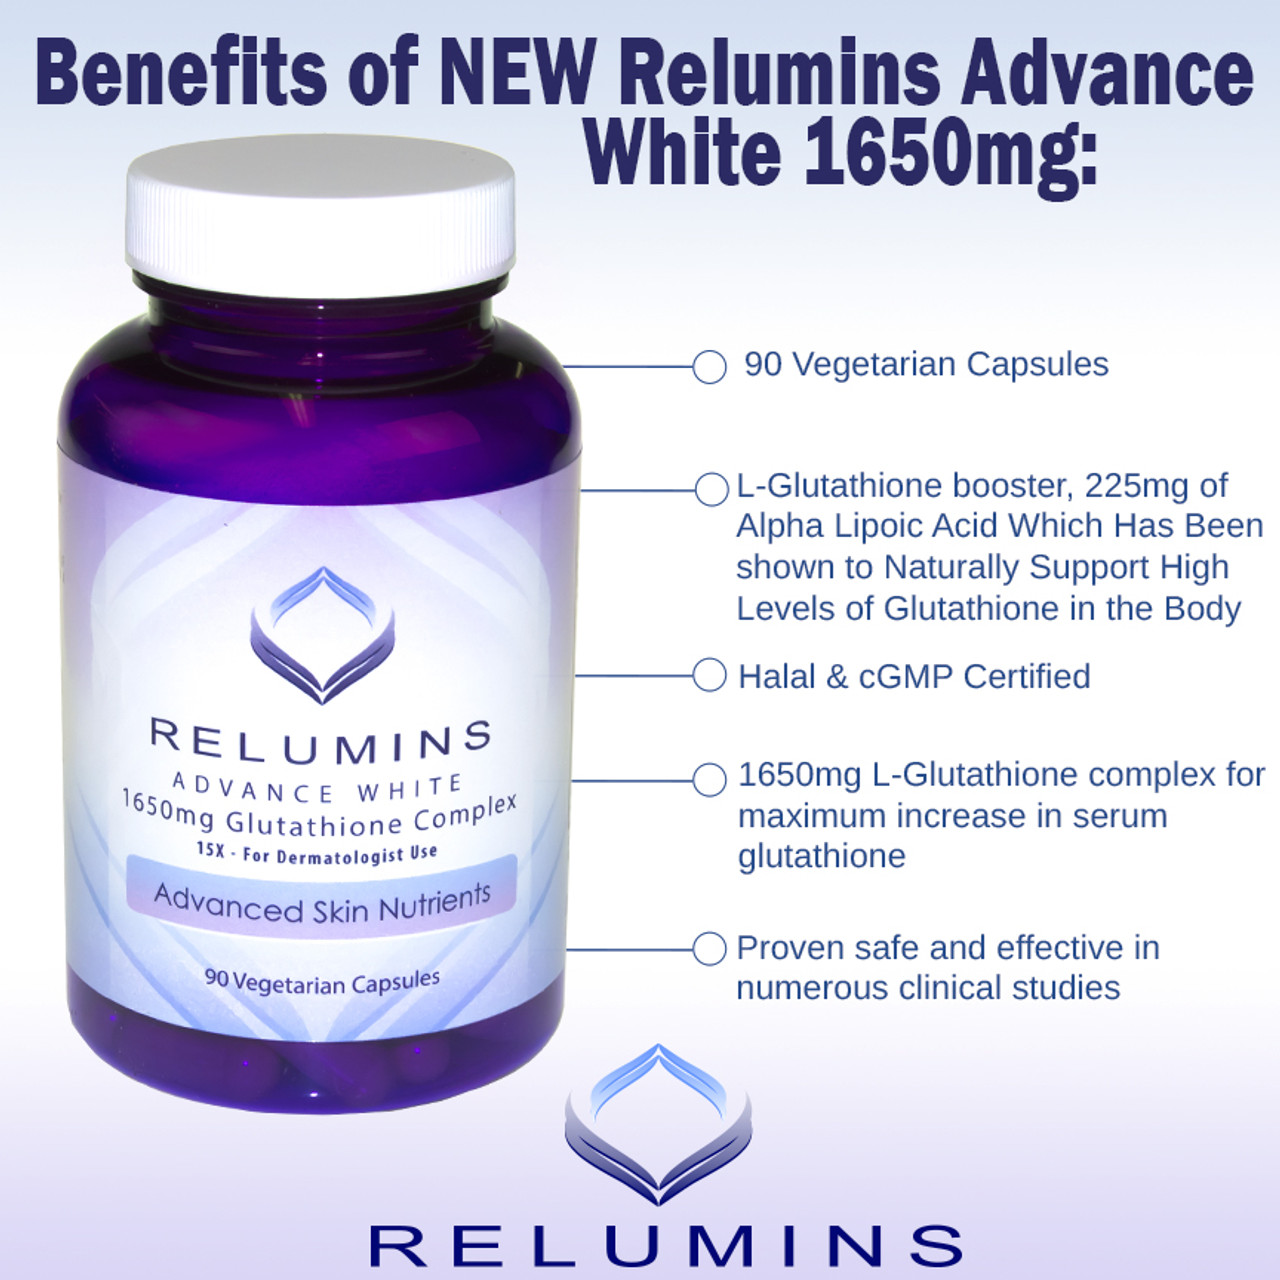 RELUMINS ADVANCE WHITE 1650mg Glutathione Complex 15X – for DERMATOLOGIST USE